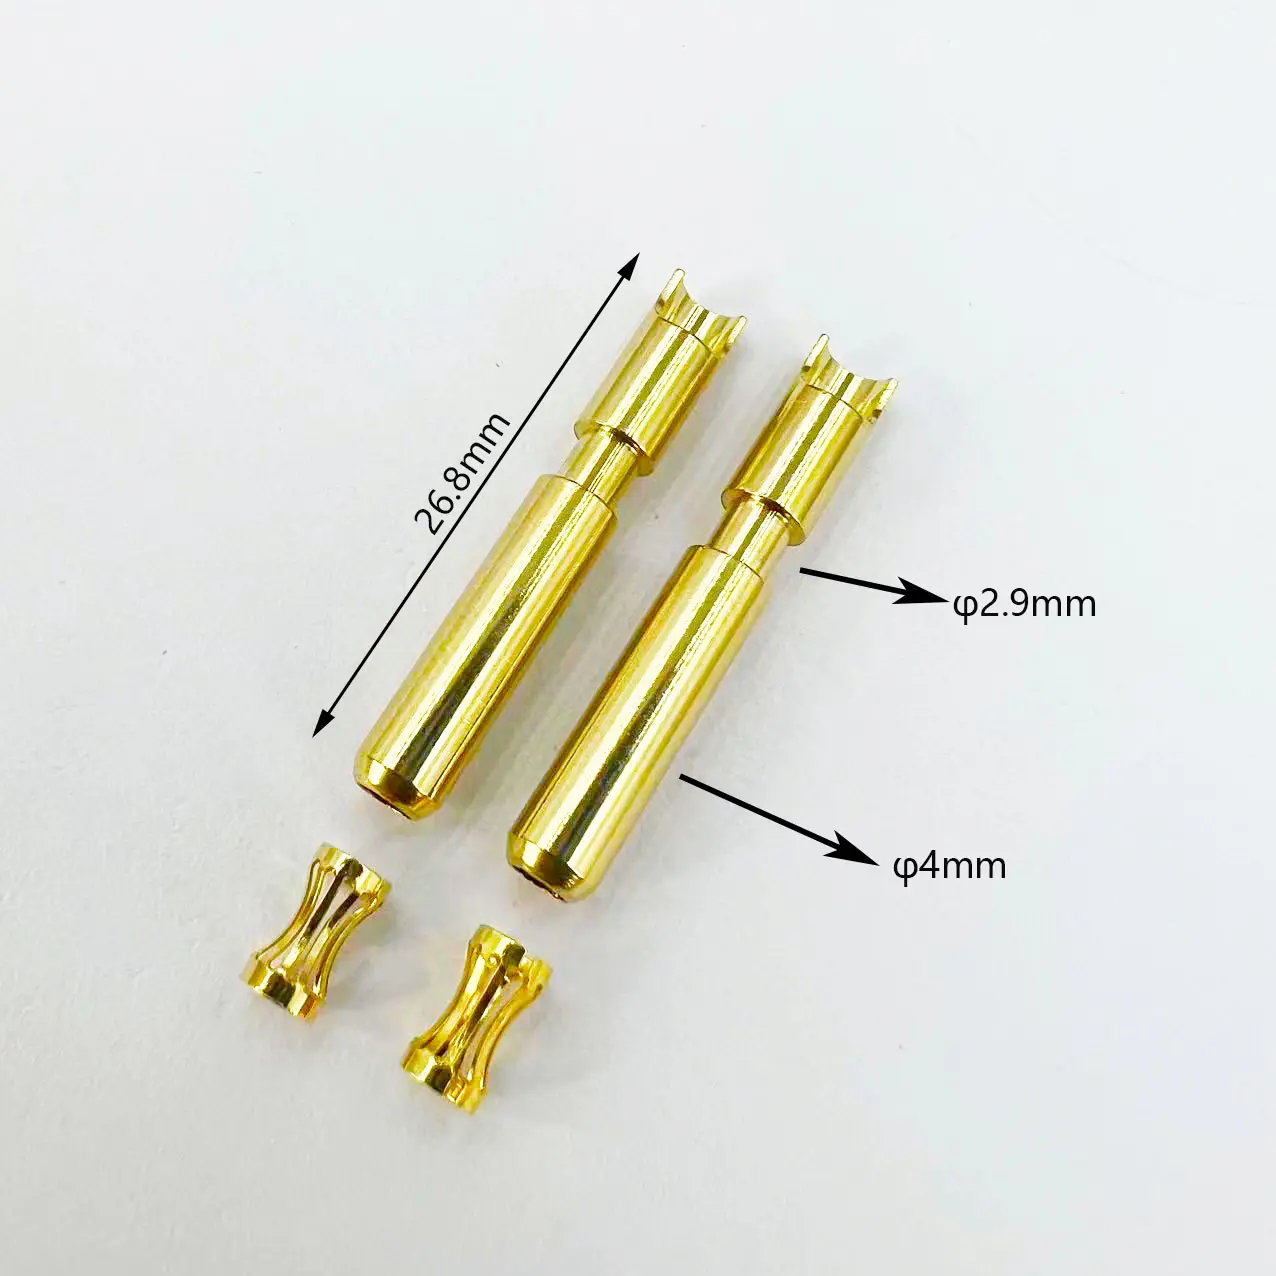 Verkopen China Fabriek Crown Spring Connector Test Pin Waterdichte Pin Socket Messing Goud Beplating.